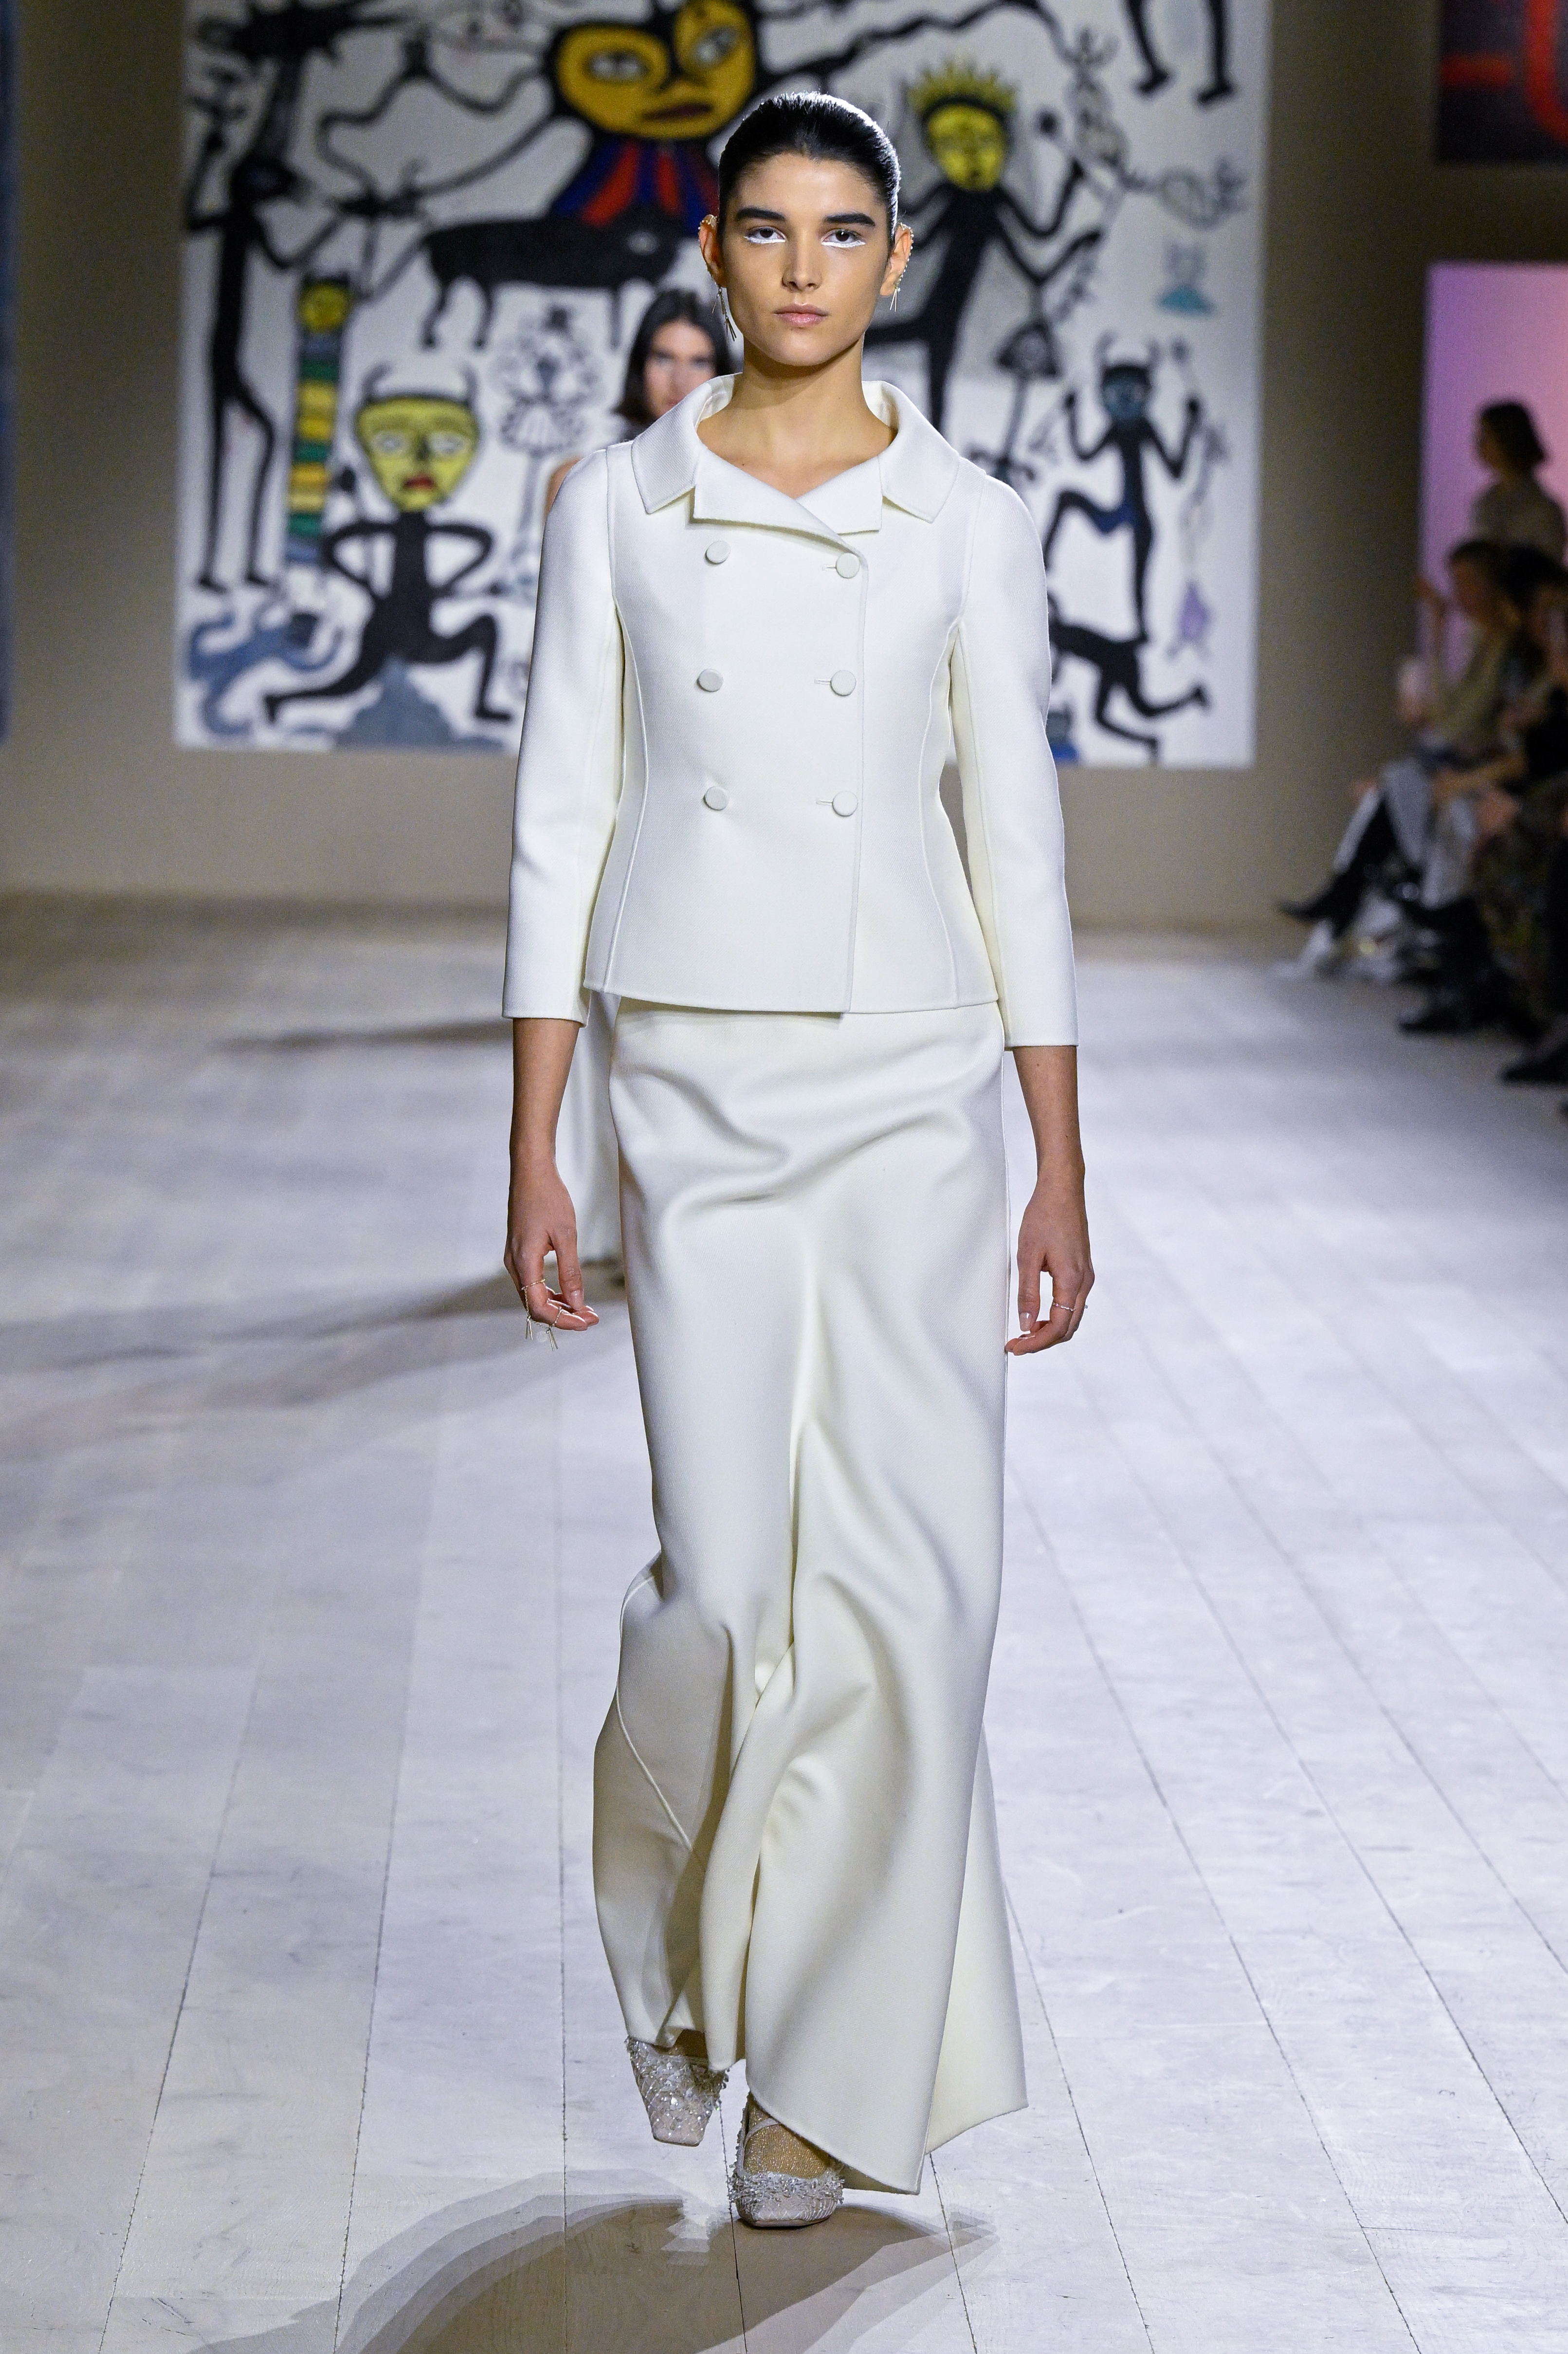 Maria Grazia Chiuri's Dior Couture Show Was All About Quiet Luxury – WWD